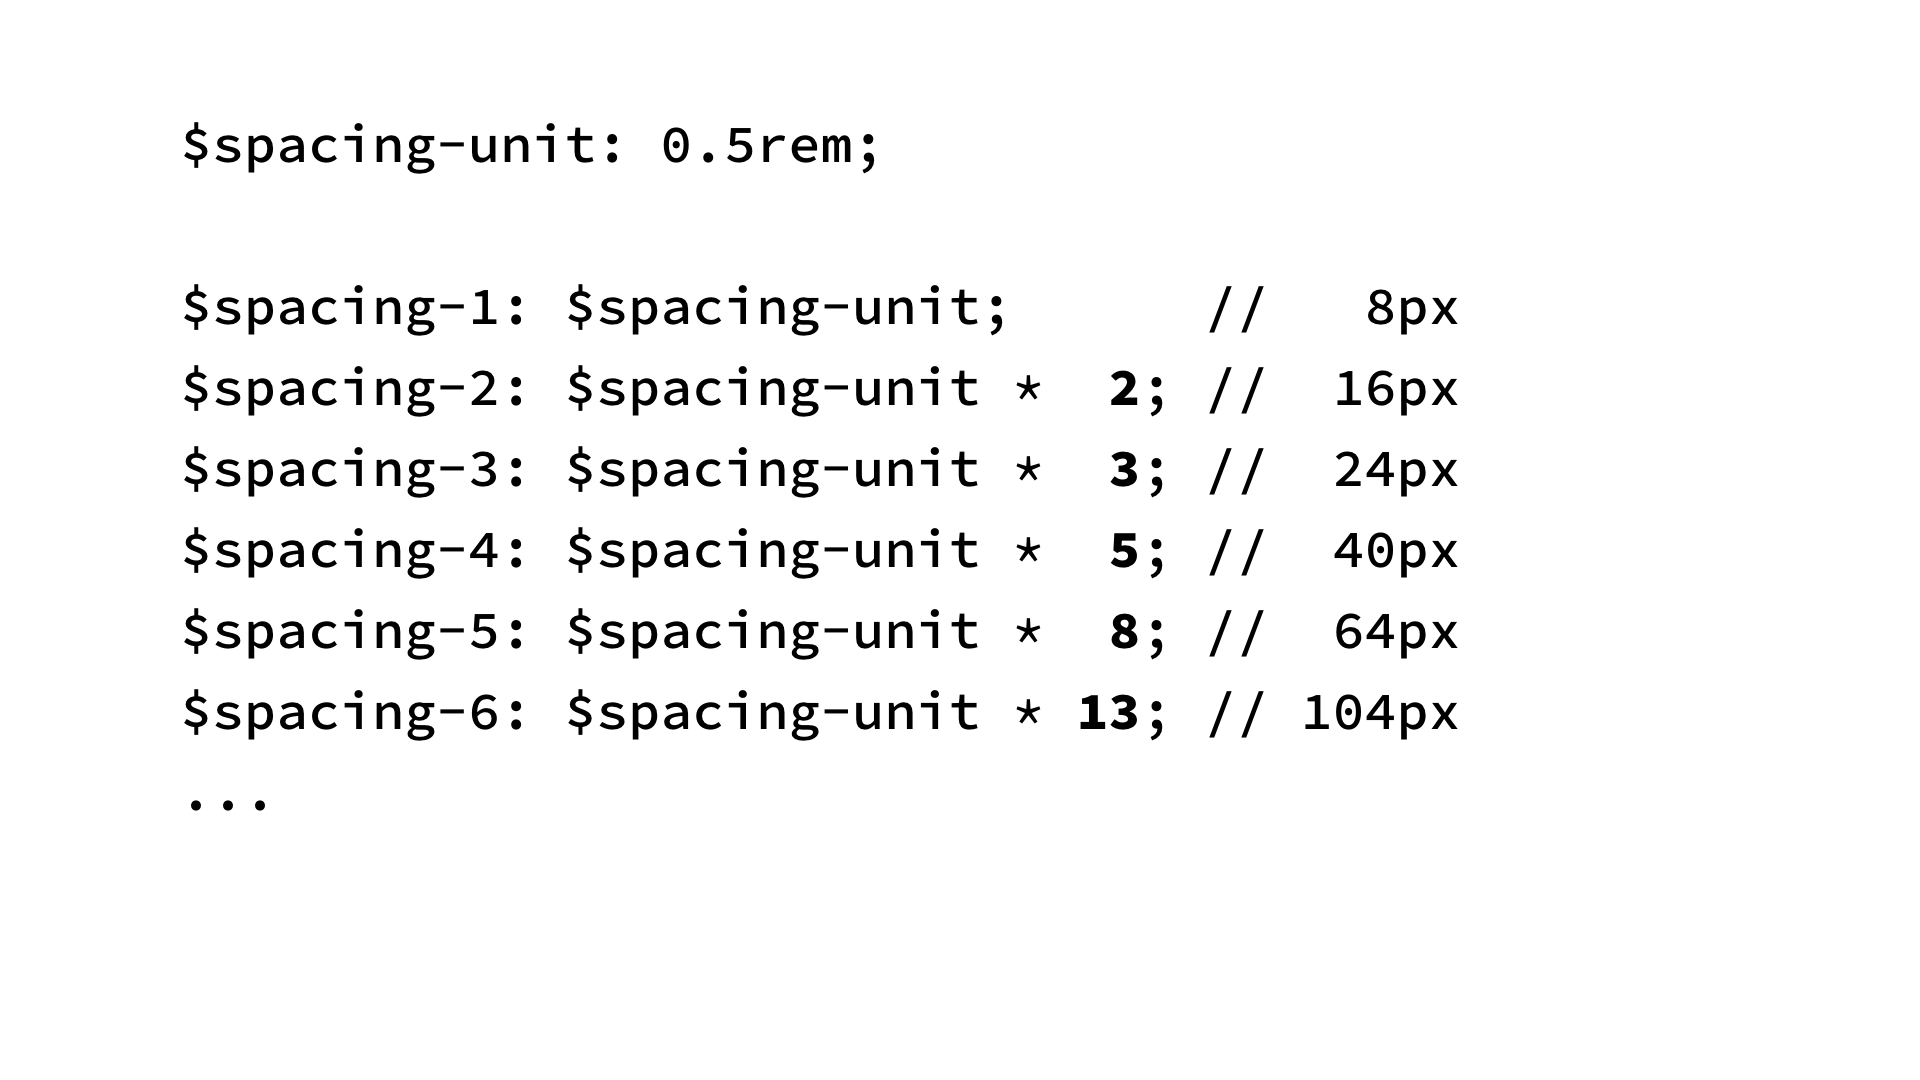 $spacing-unit: 0.5rem; $spacing-1: $spacing-unit; // 8px $spacing-2: $spacing-unit * 2; // 16px $spacing-3: $spacing-unit * 3; // 24px $spacing-4: $spacing-unit * 5; // 40px $spacing-5: $spacing-unit * 8; // 64px $spacing-6: $spacing-unit * 13; // 104px . 